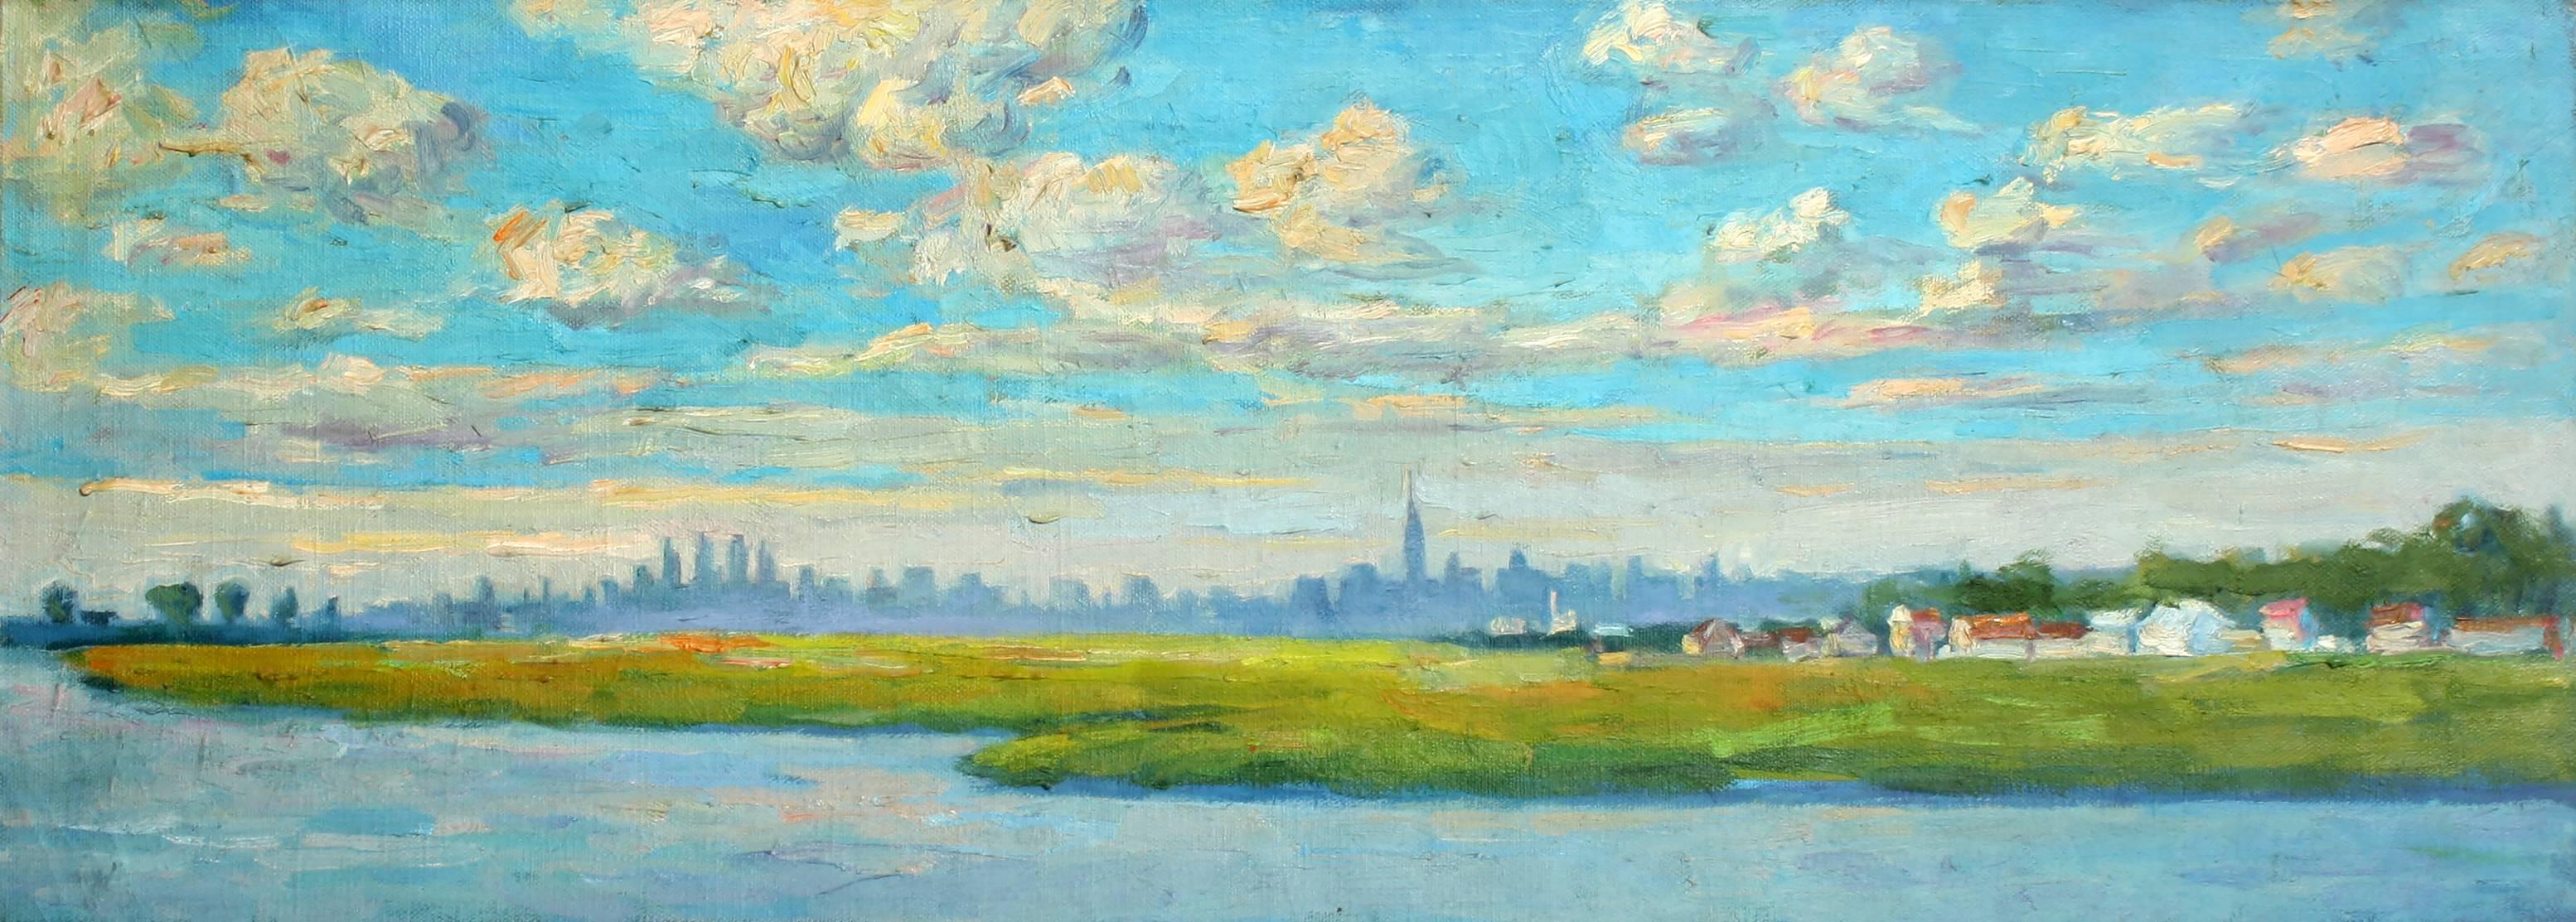 Chuck Fee Wong Landscape Painting - View of Manhattan